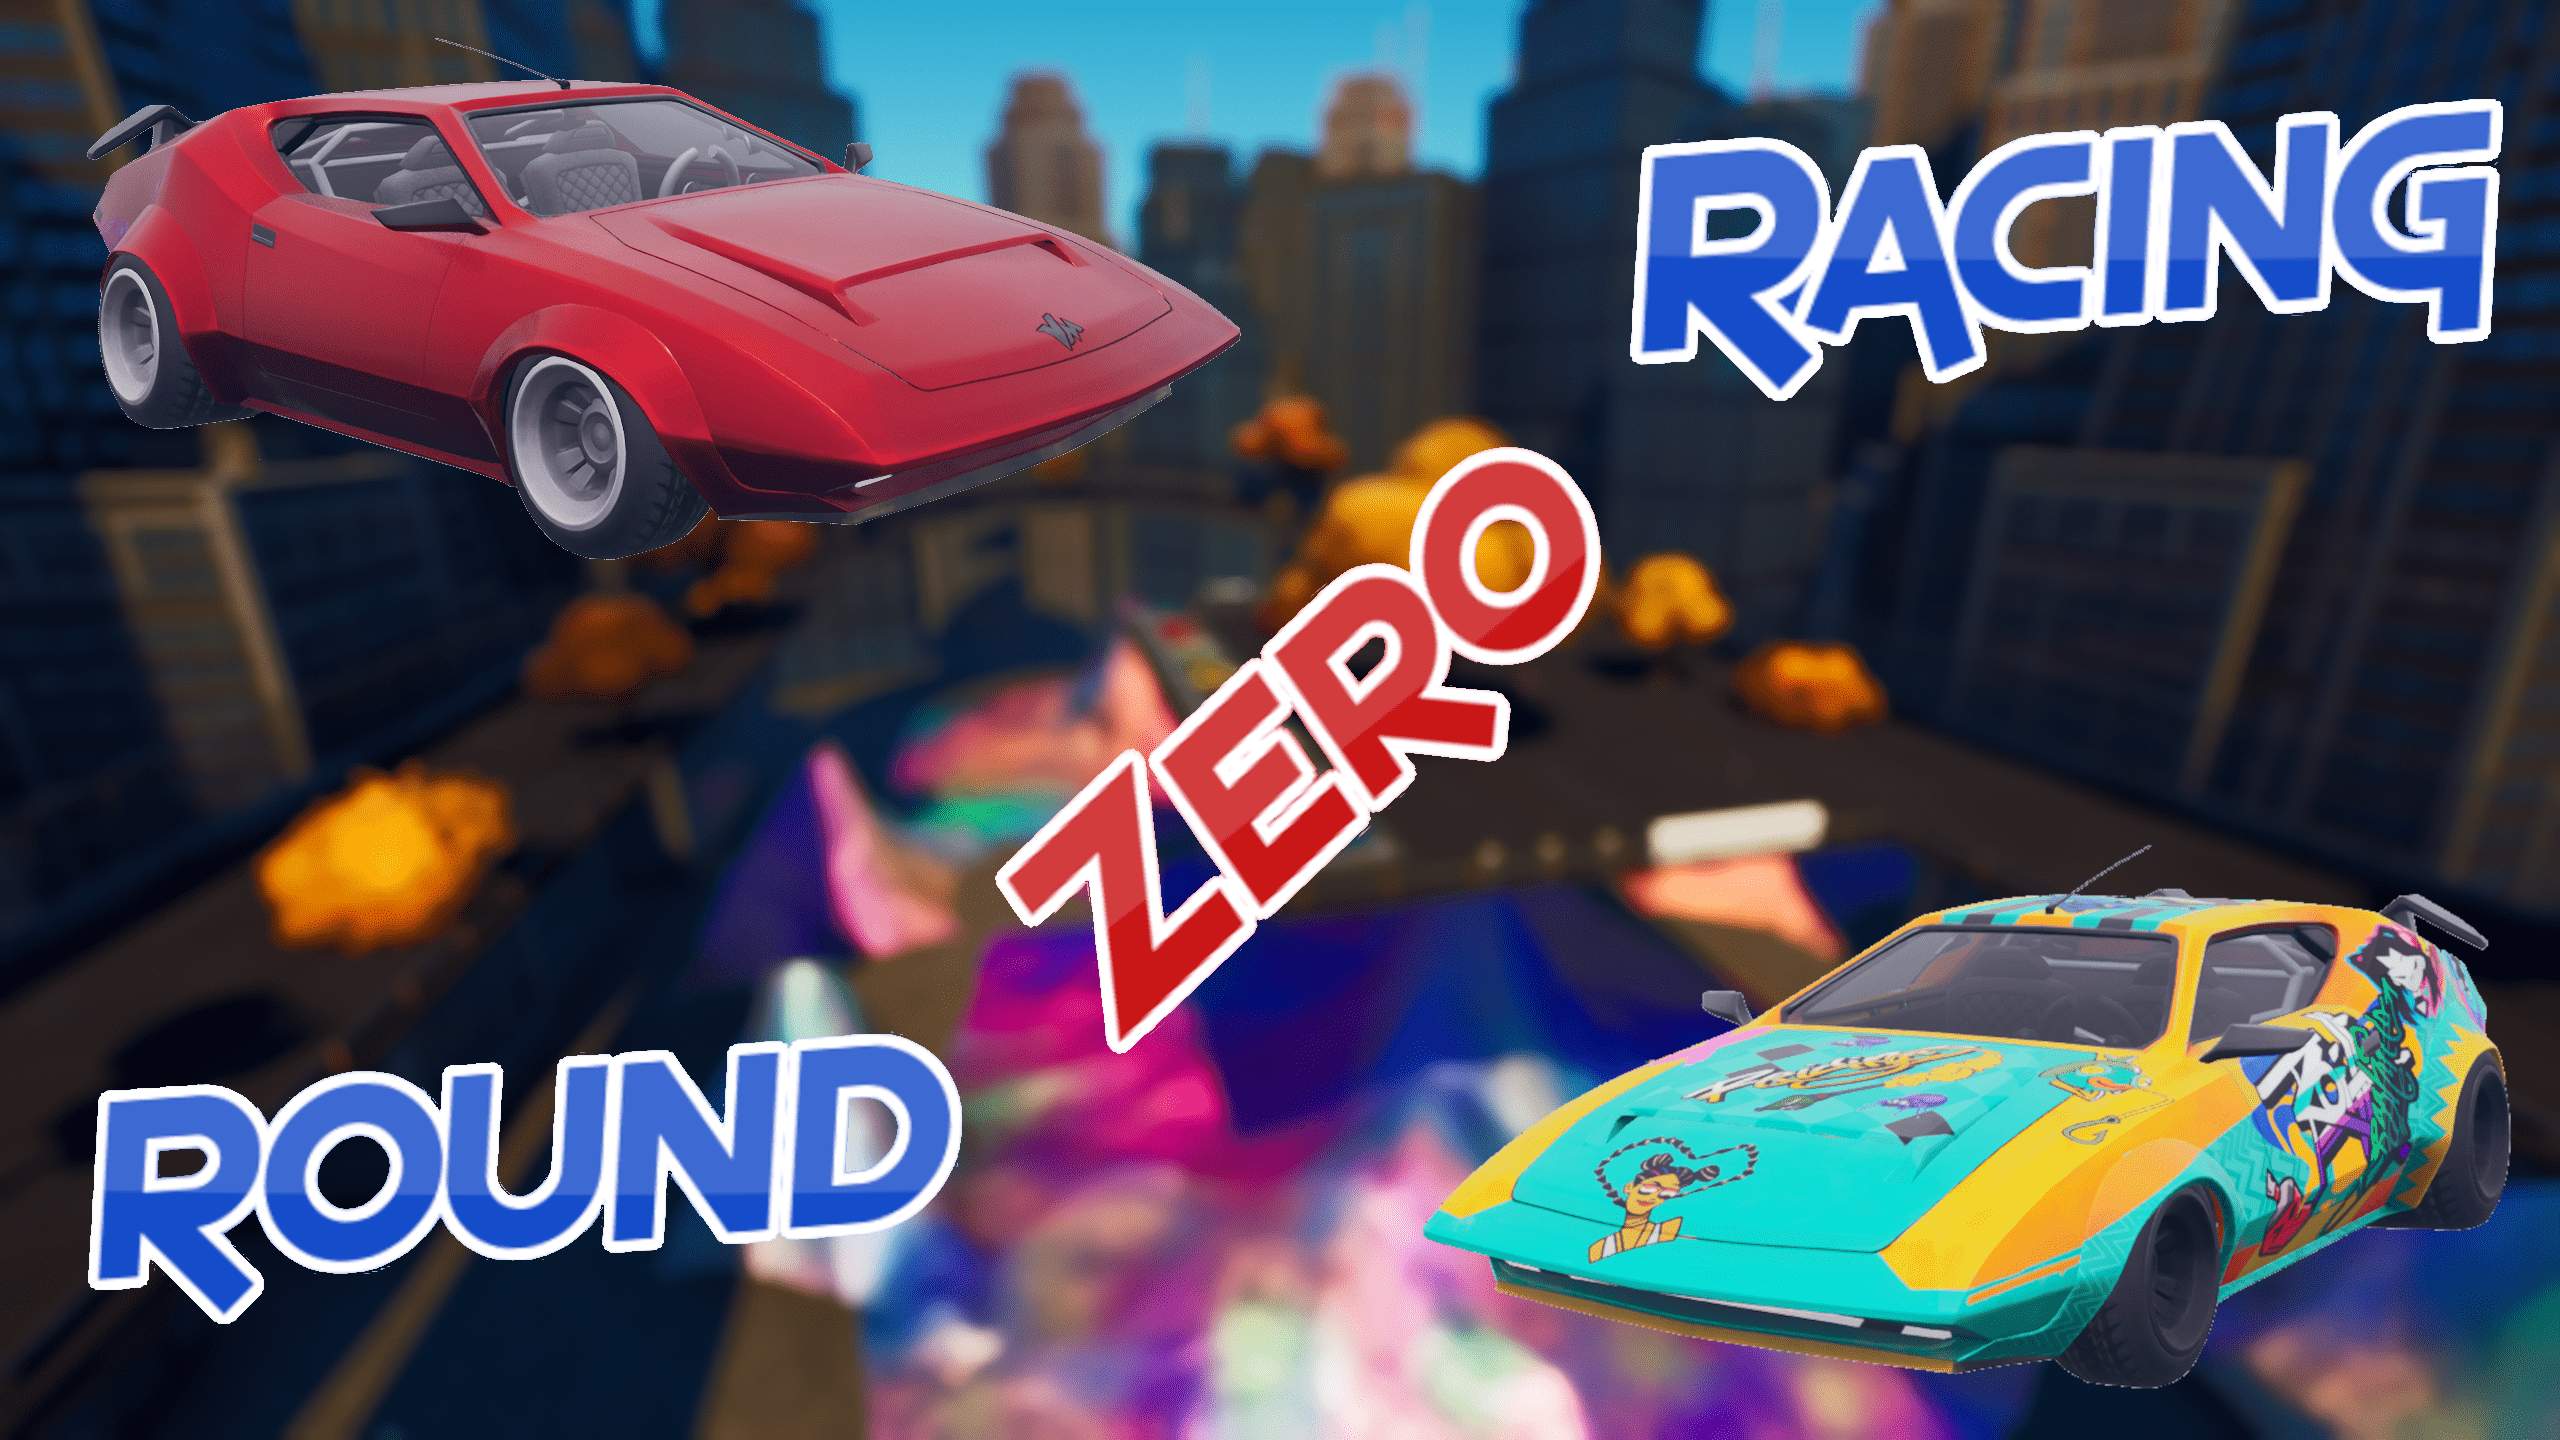 🏁 Round Zero Racing 🏁